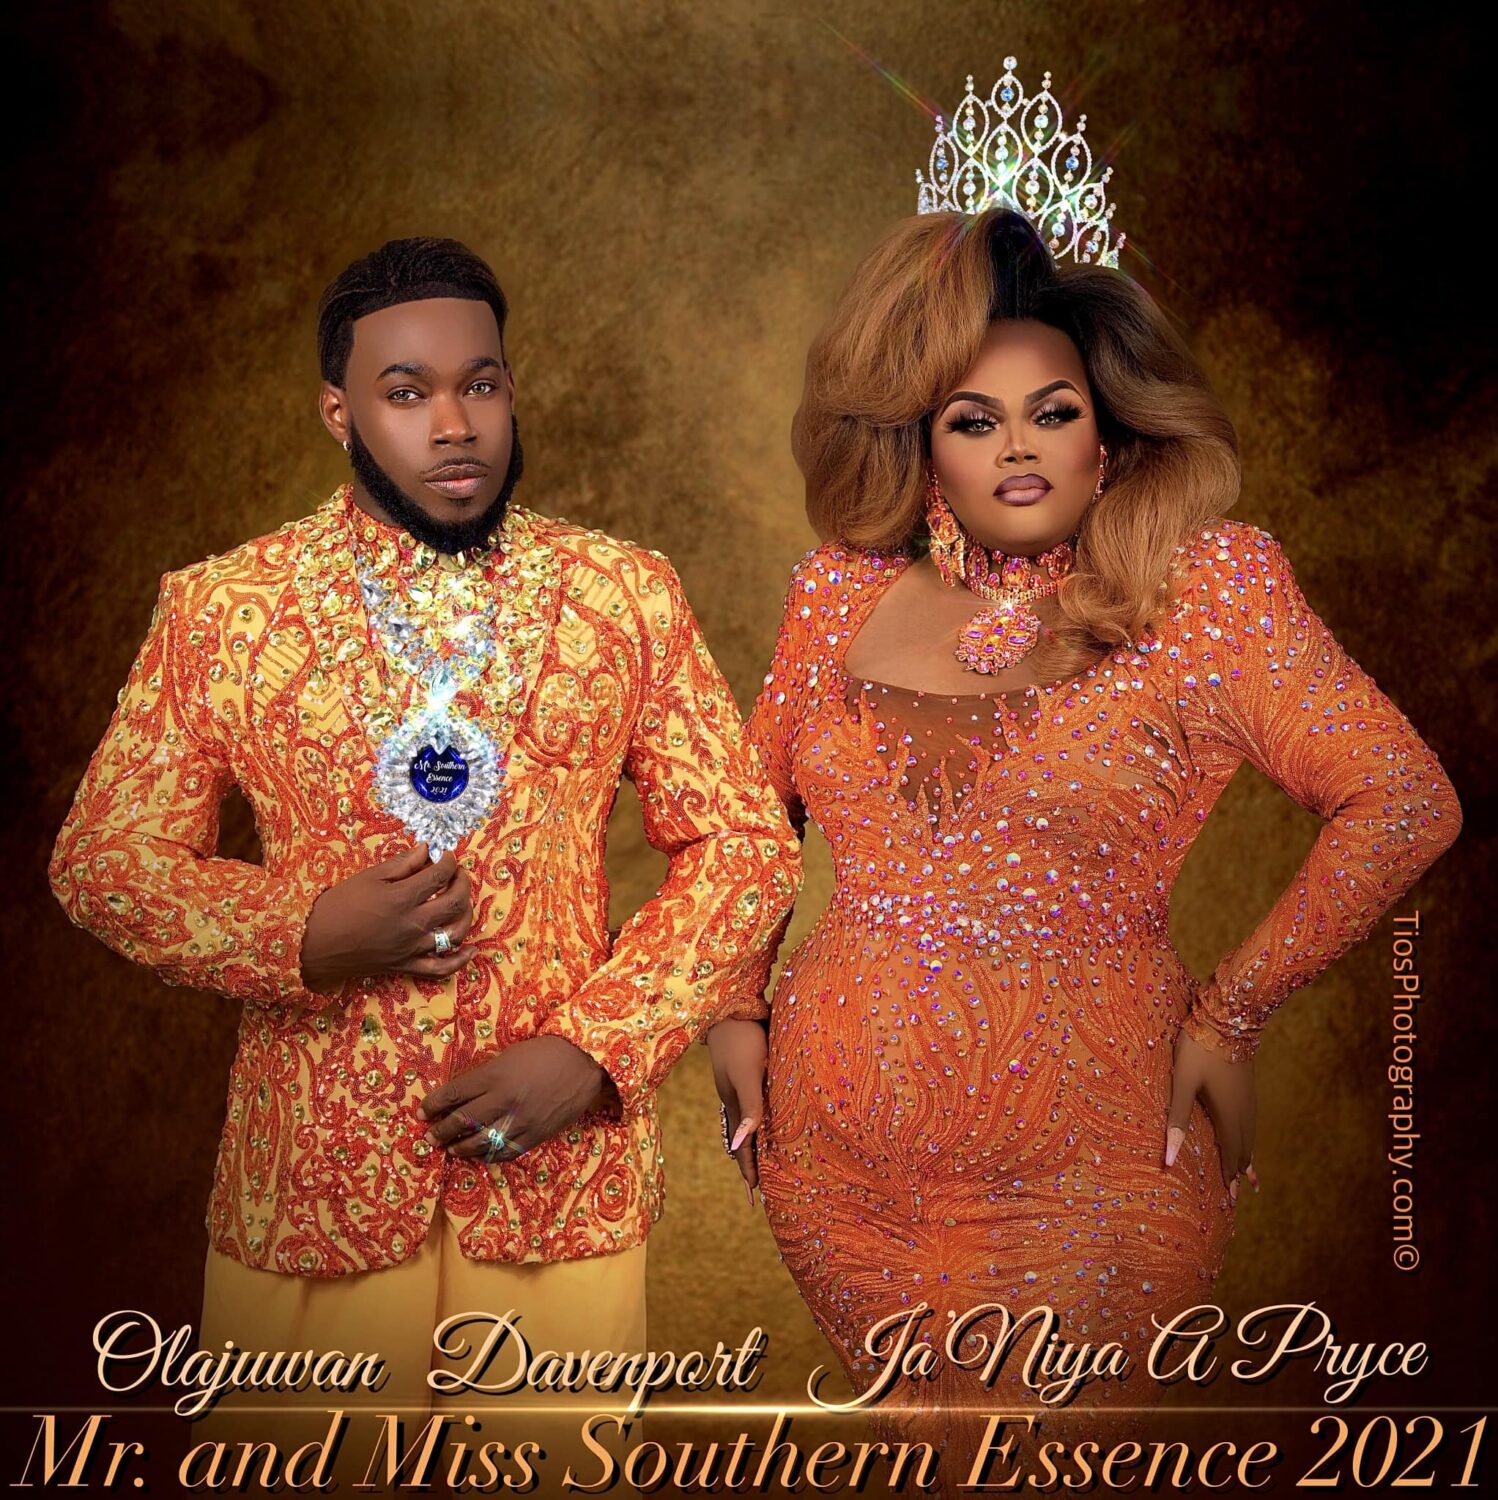 Olajuwan Davenport (Mr. Southern Essence 2021) and Ja'Niya Alexander Pryce (Miss Southern Essence 2021) | Photo by Tios Photography